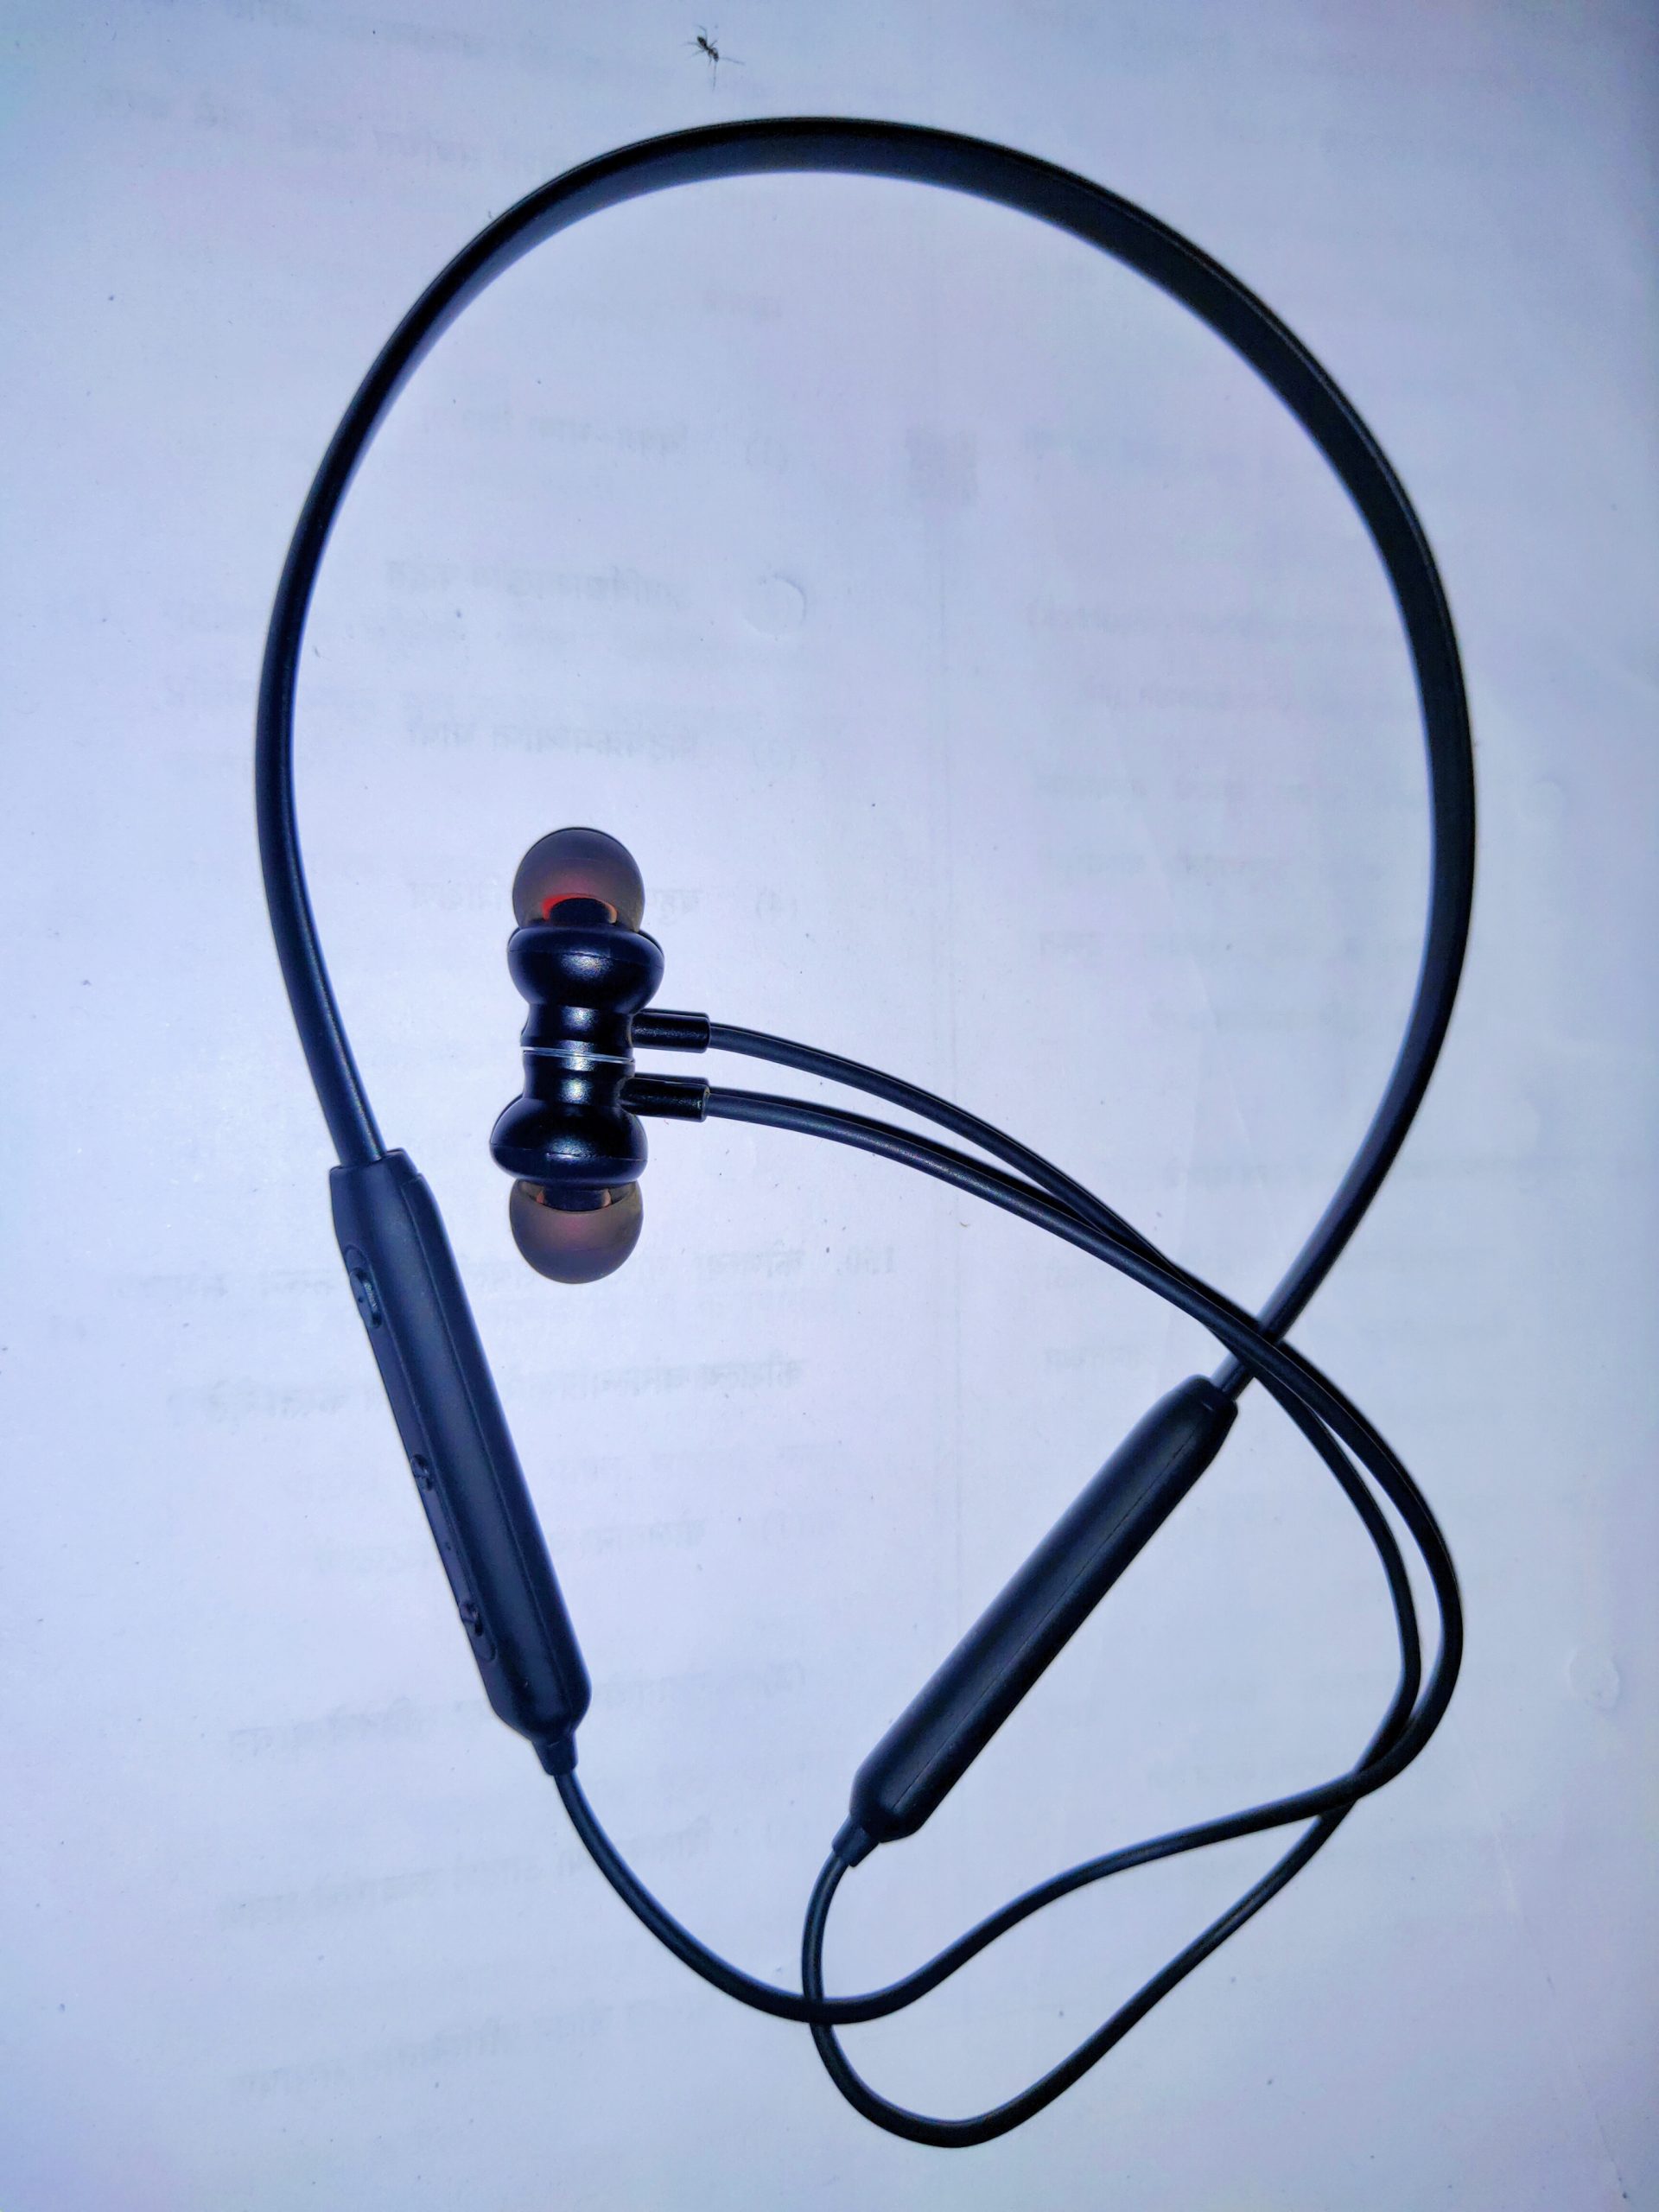 Neckband ear phones